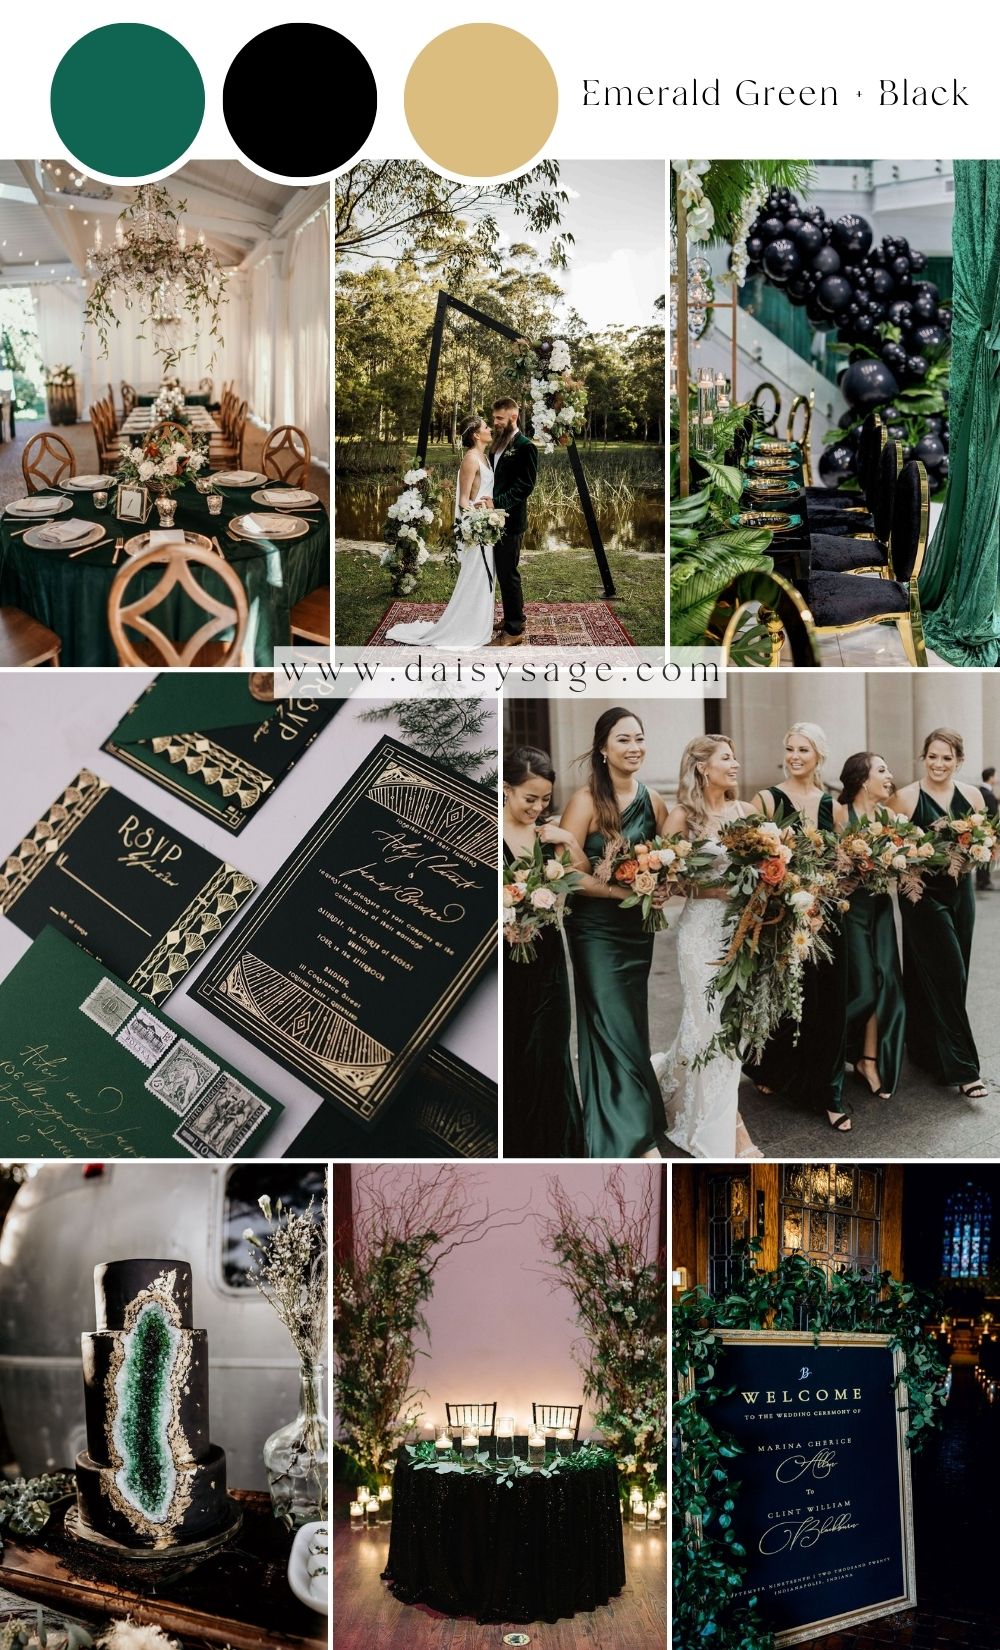 Emerald Green and Black Wedding Color Scheme